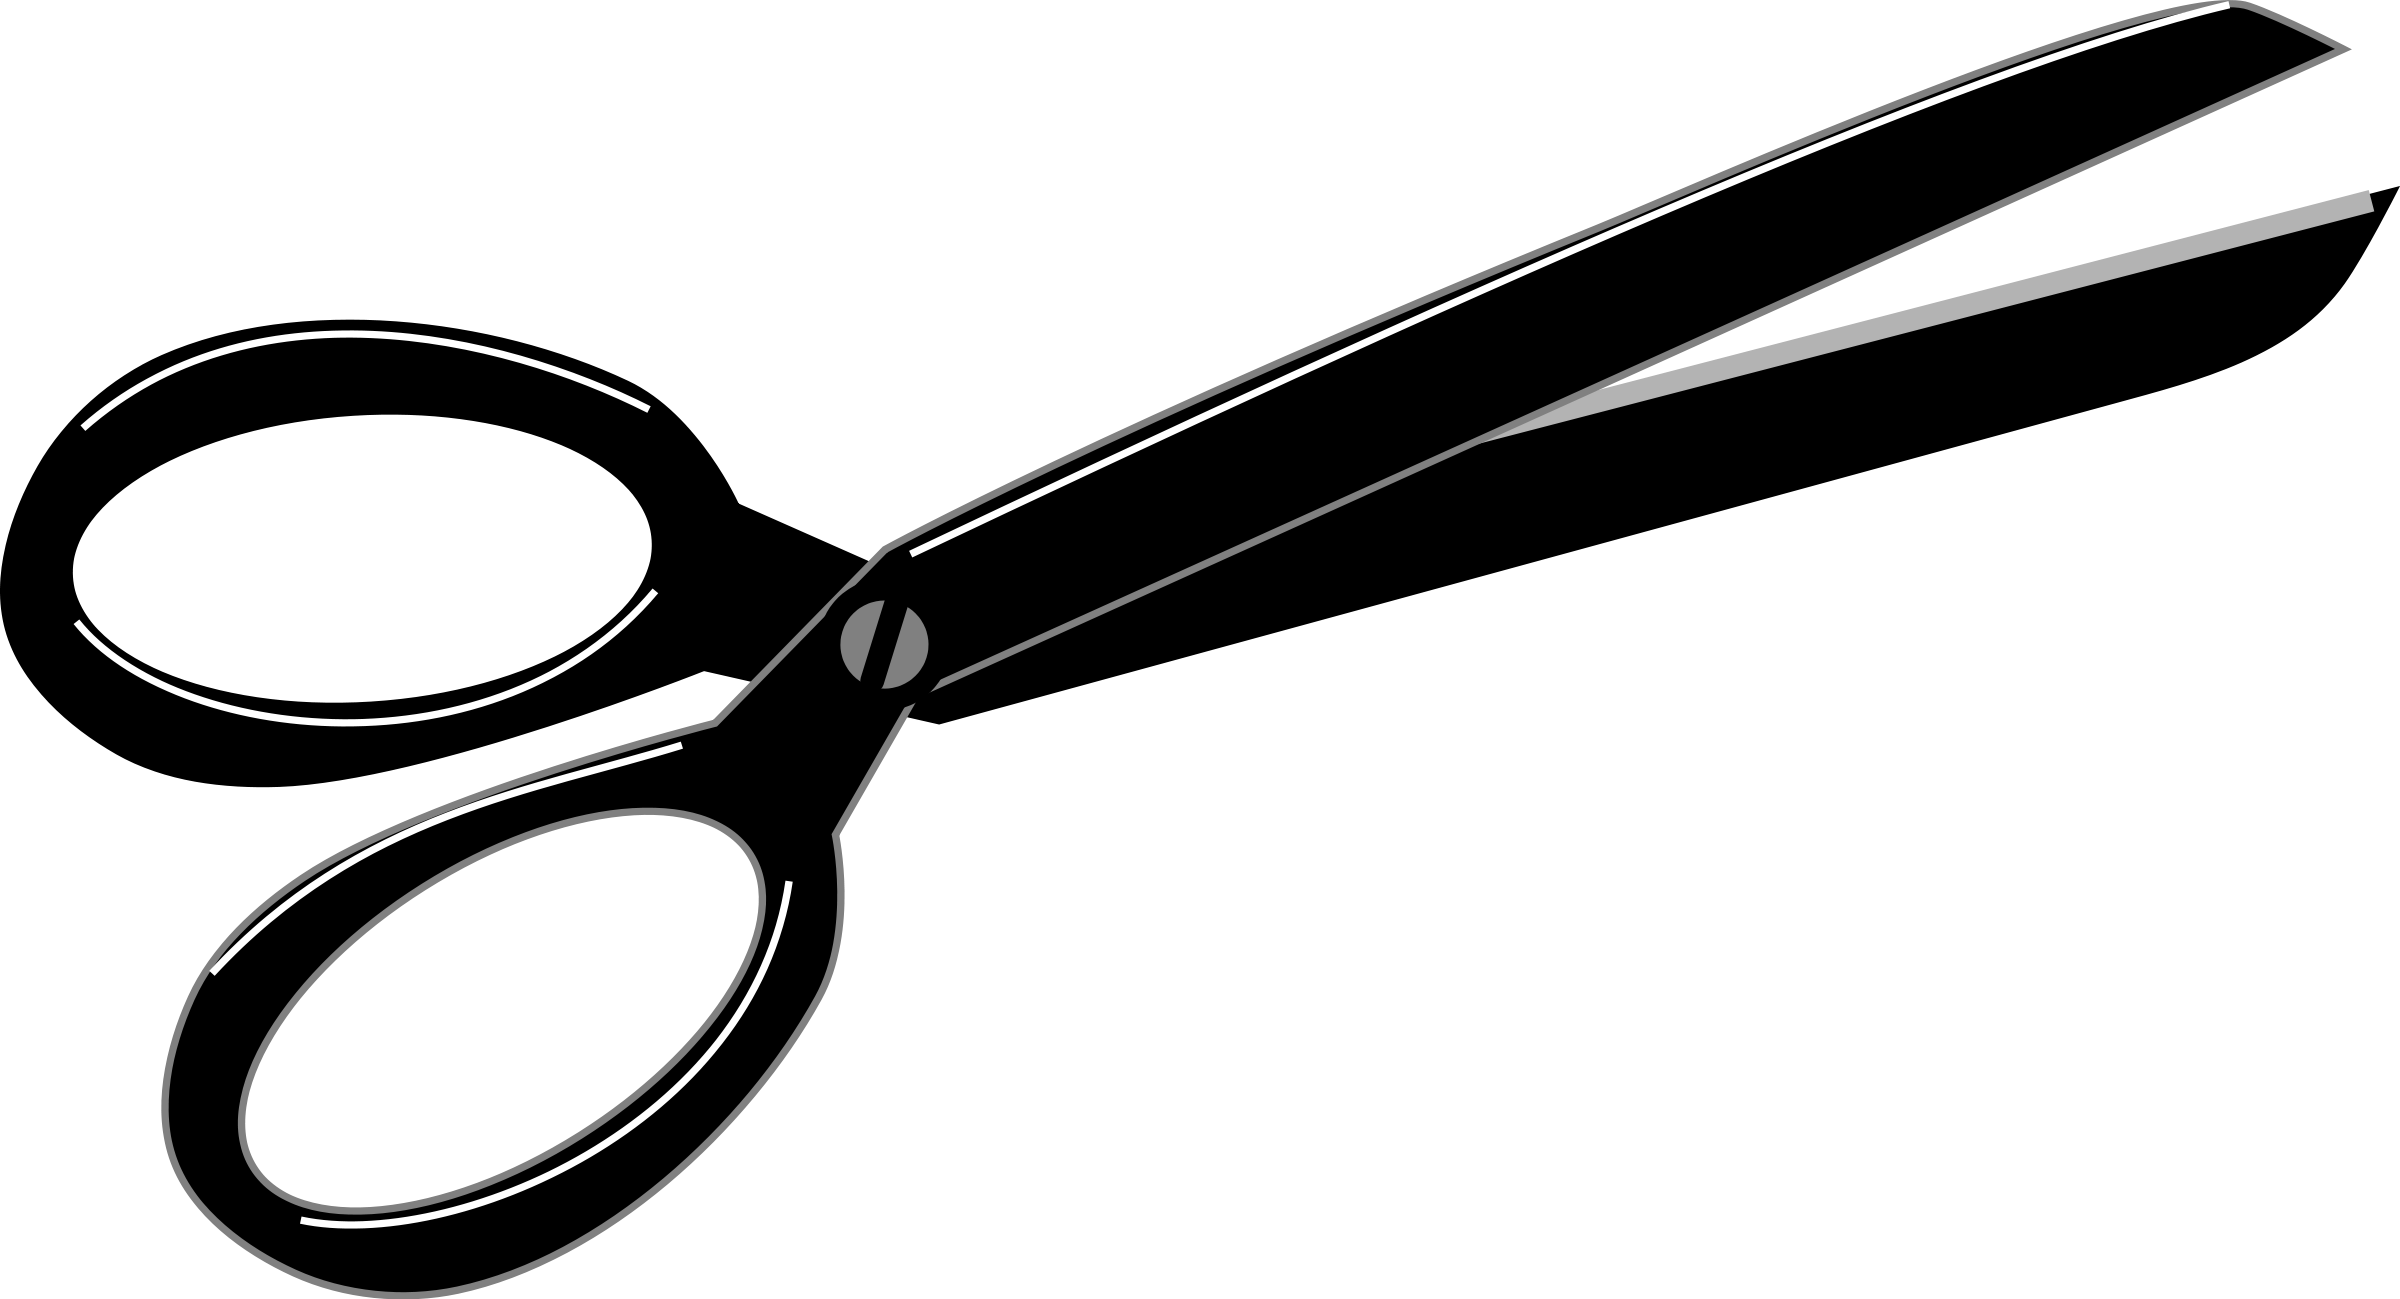 Barber scissors clip art